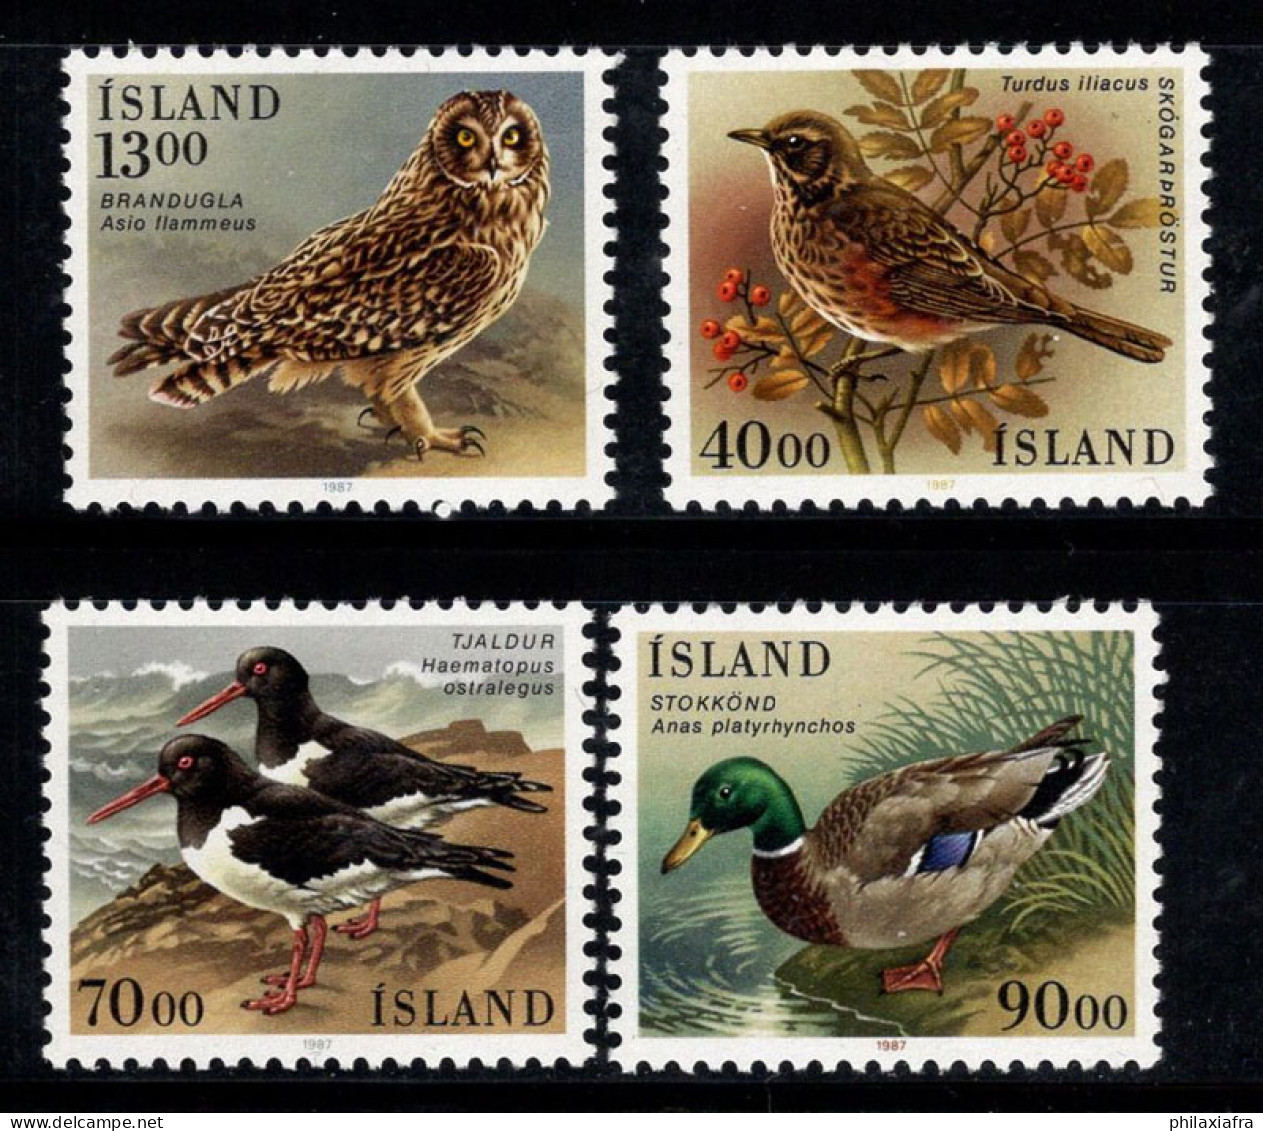 Islande 1987 Mi. 668-671 Neuf ** 100% Oiseaux, Faune - Neufs